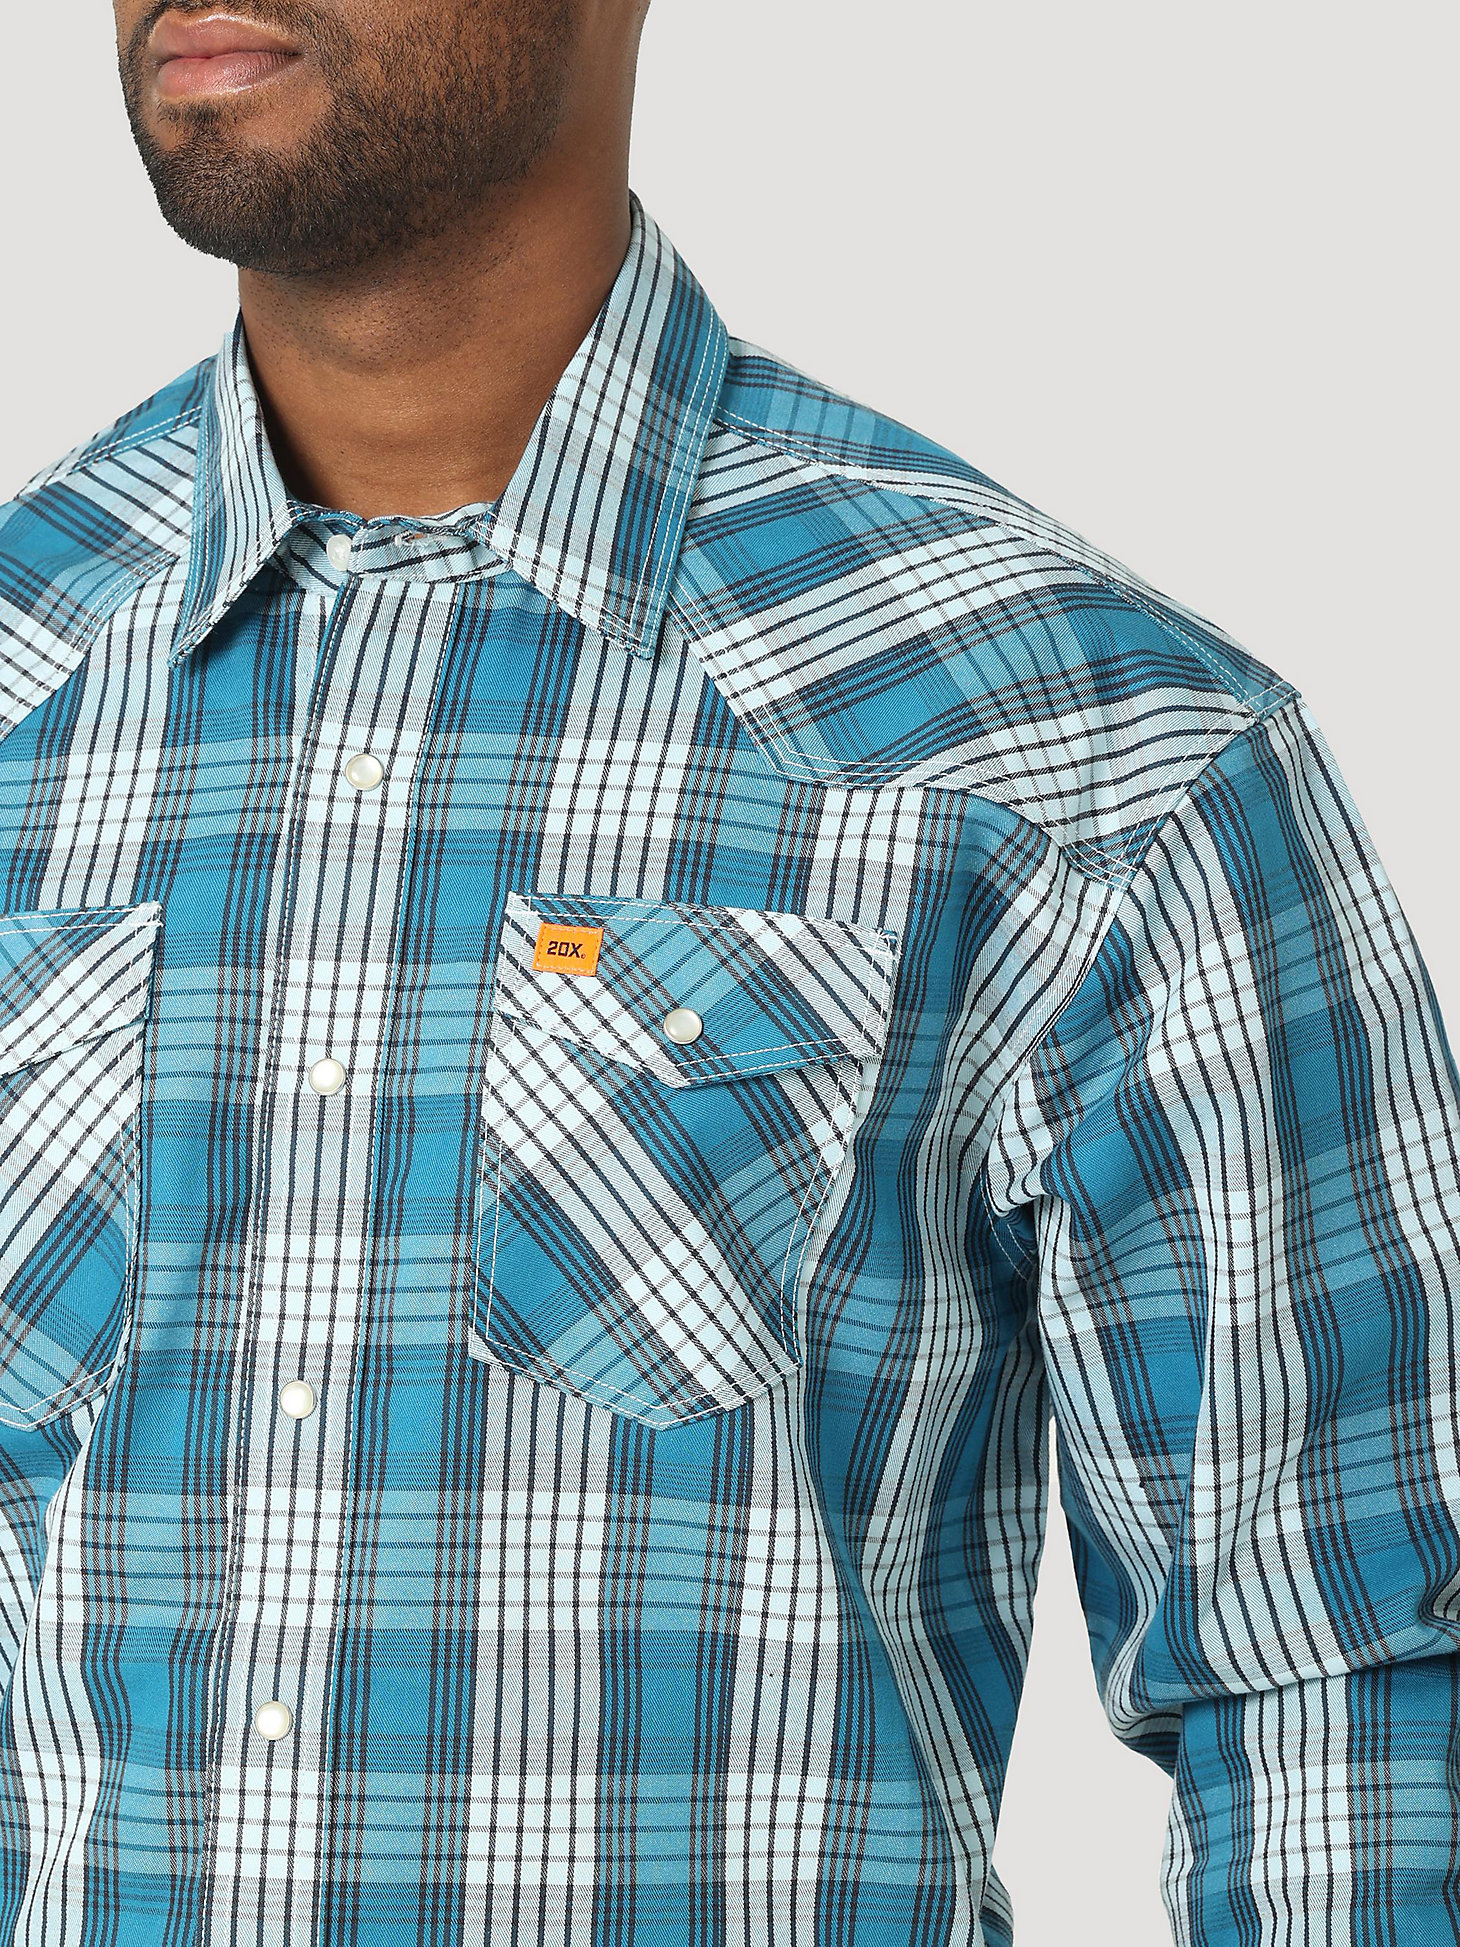 Men's Wrangler® 20X® Fire Resistant Long Sleeve Western Snap Plaid Shirt in Aqua alternative view 2